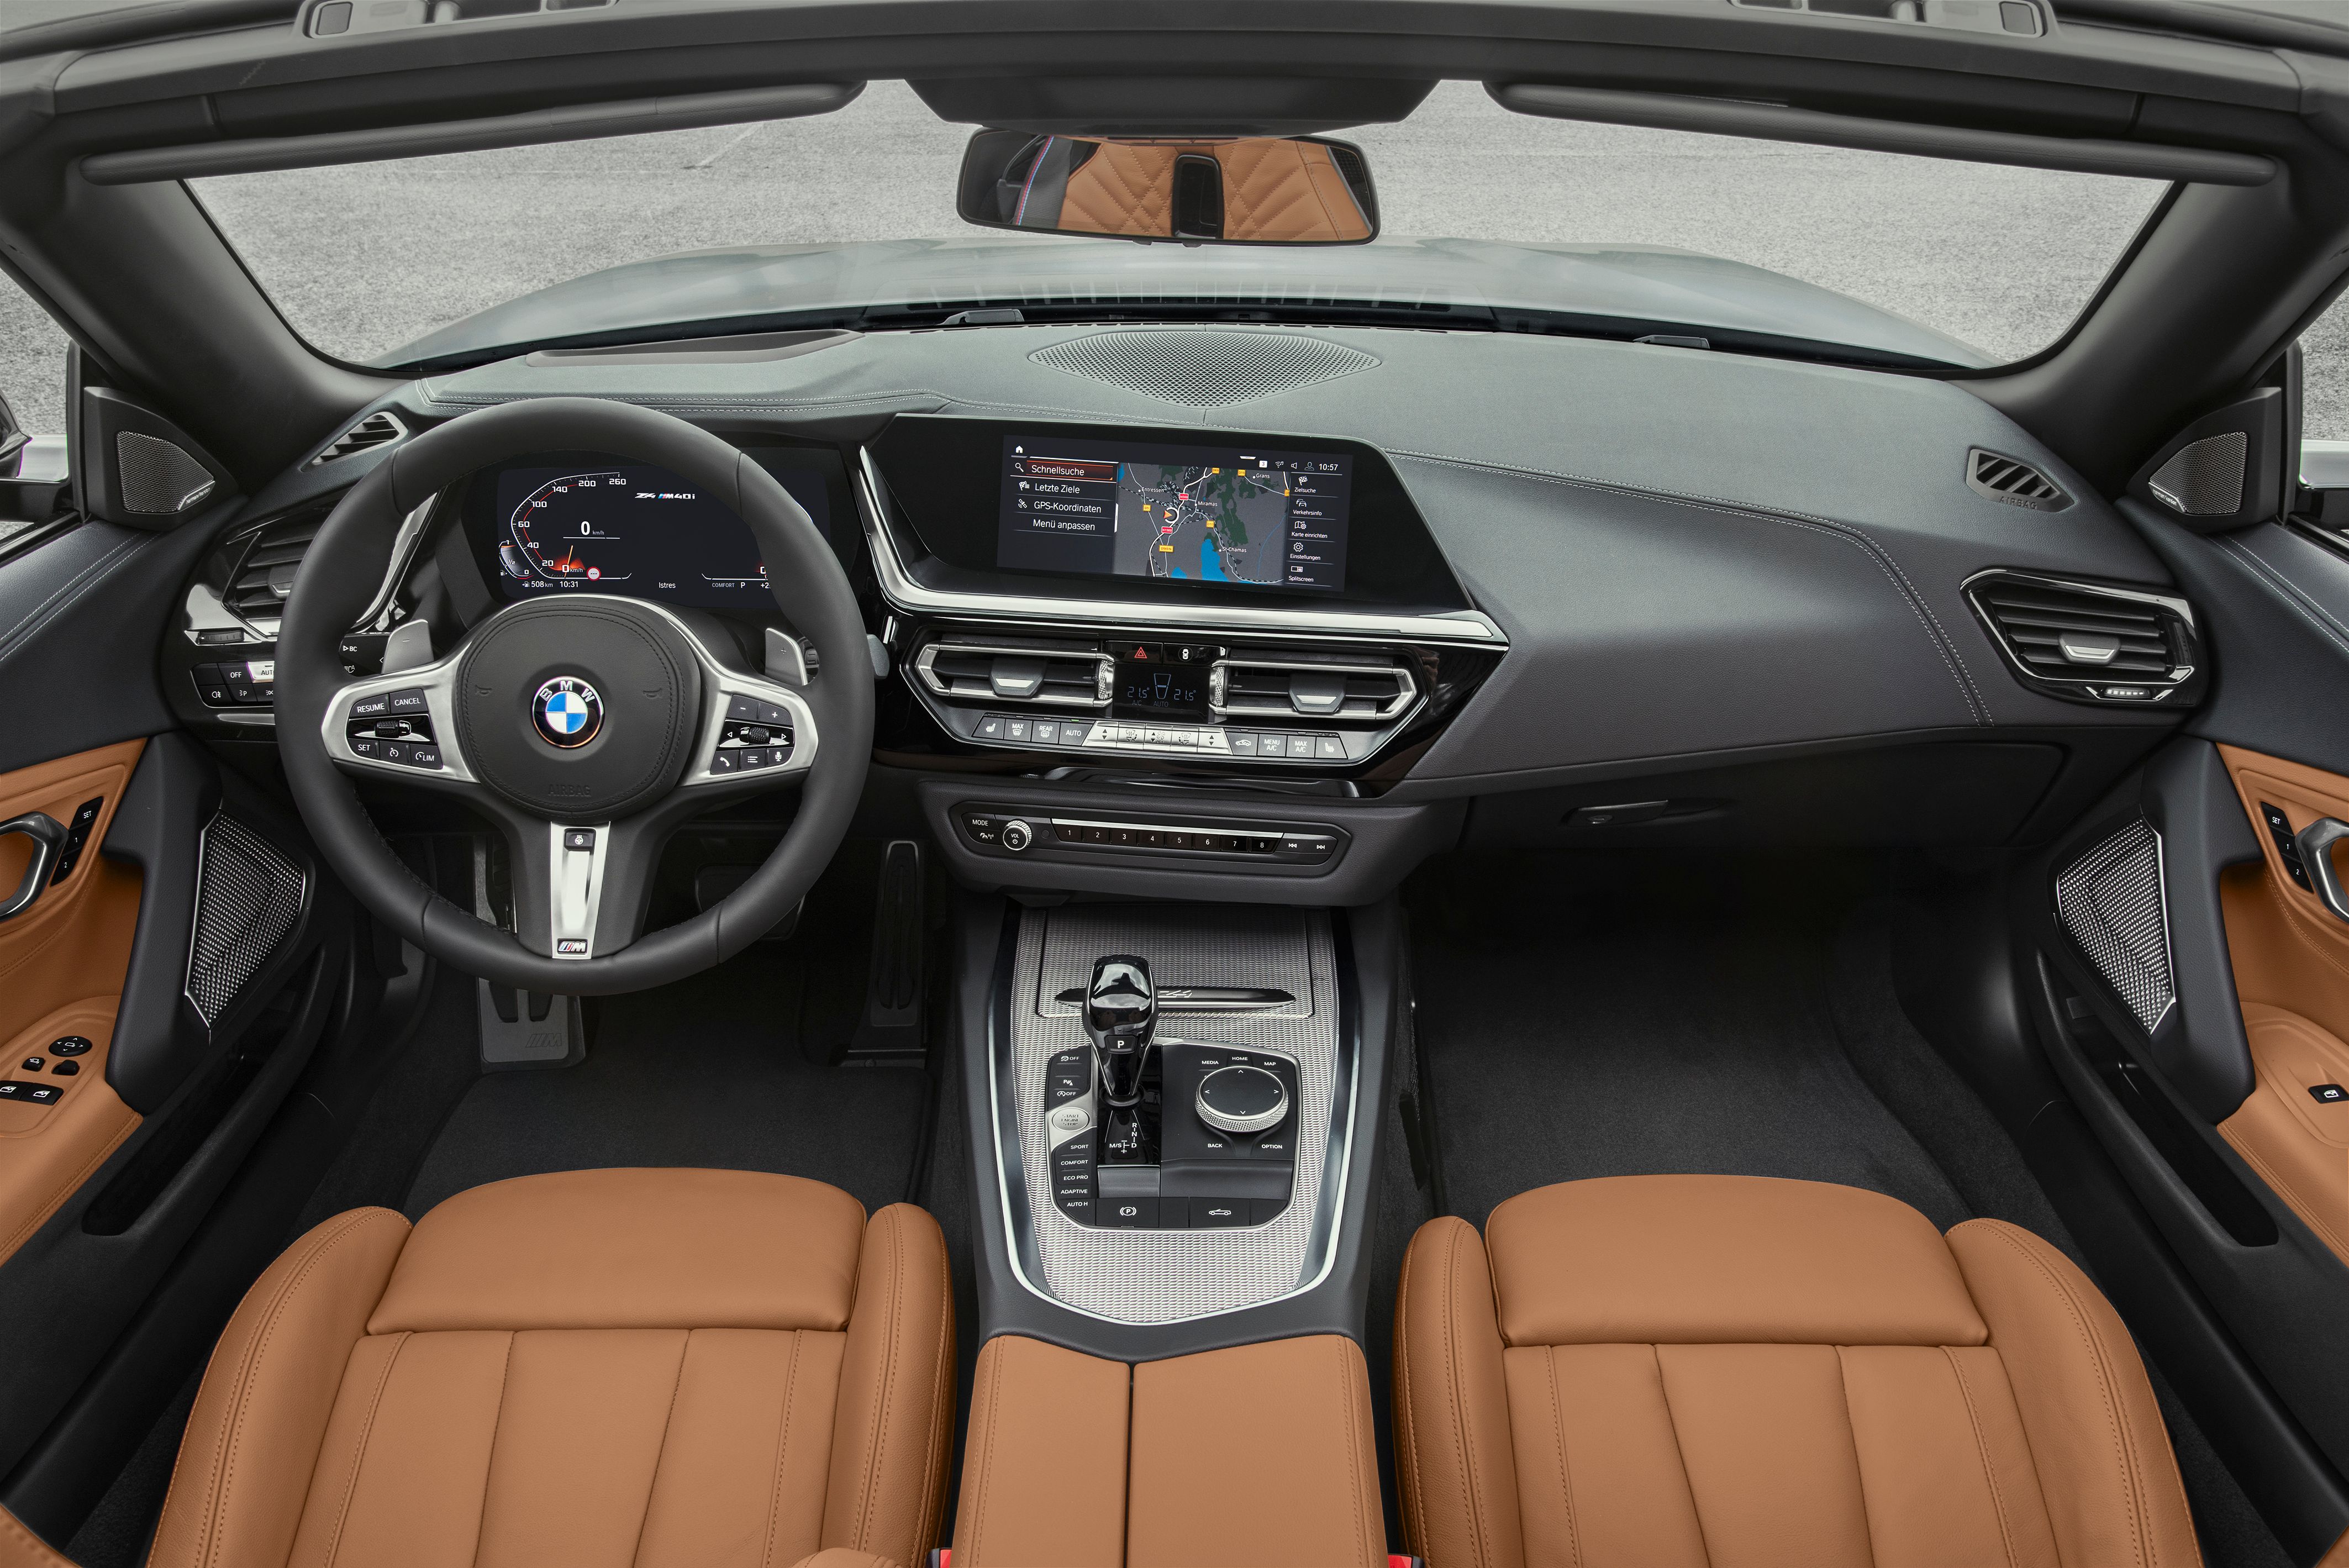 2020 Silver BMW Z4 Dashboard View